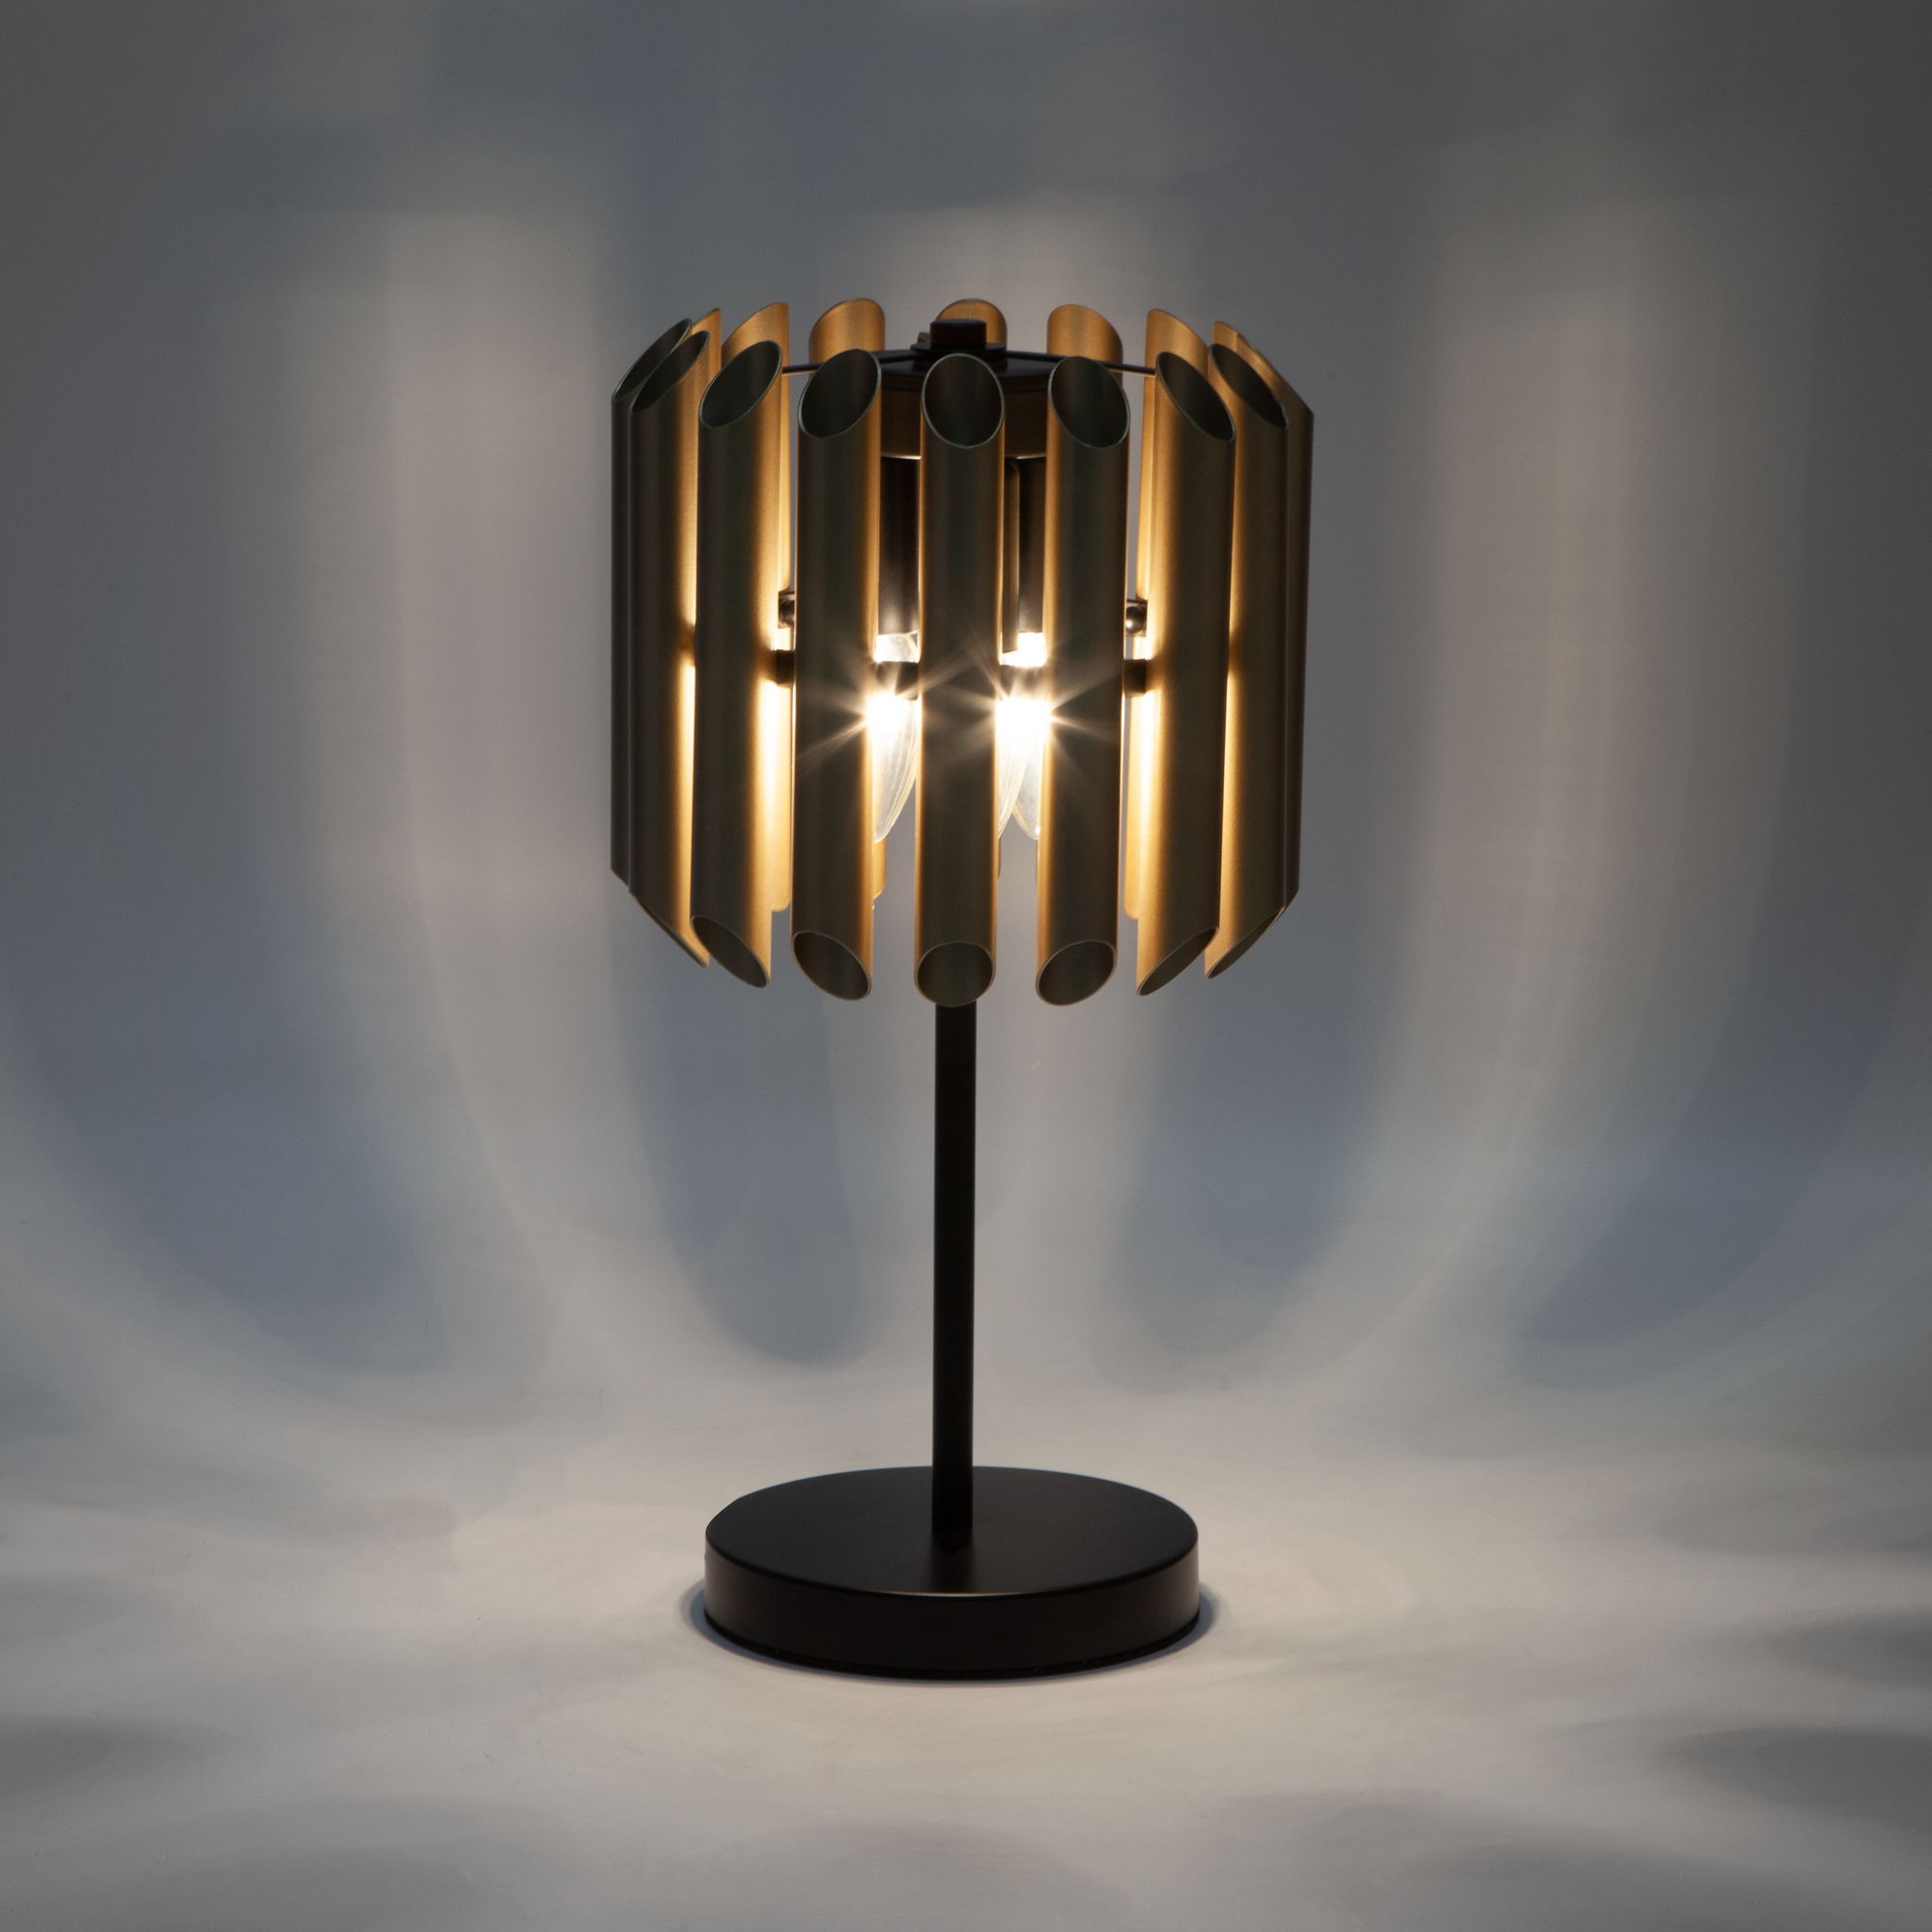 Настольная лампа с металлическим плафоном Bogate's Castellie 01106/3 черный / шампань. Фото 3